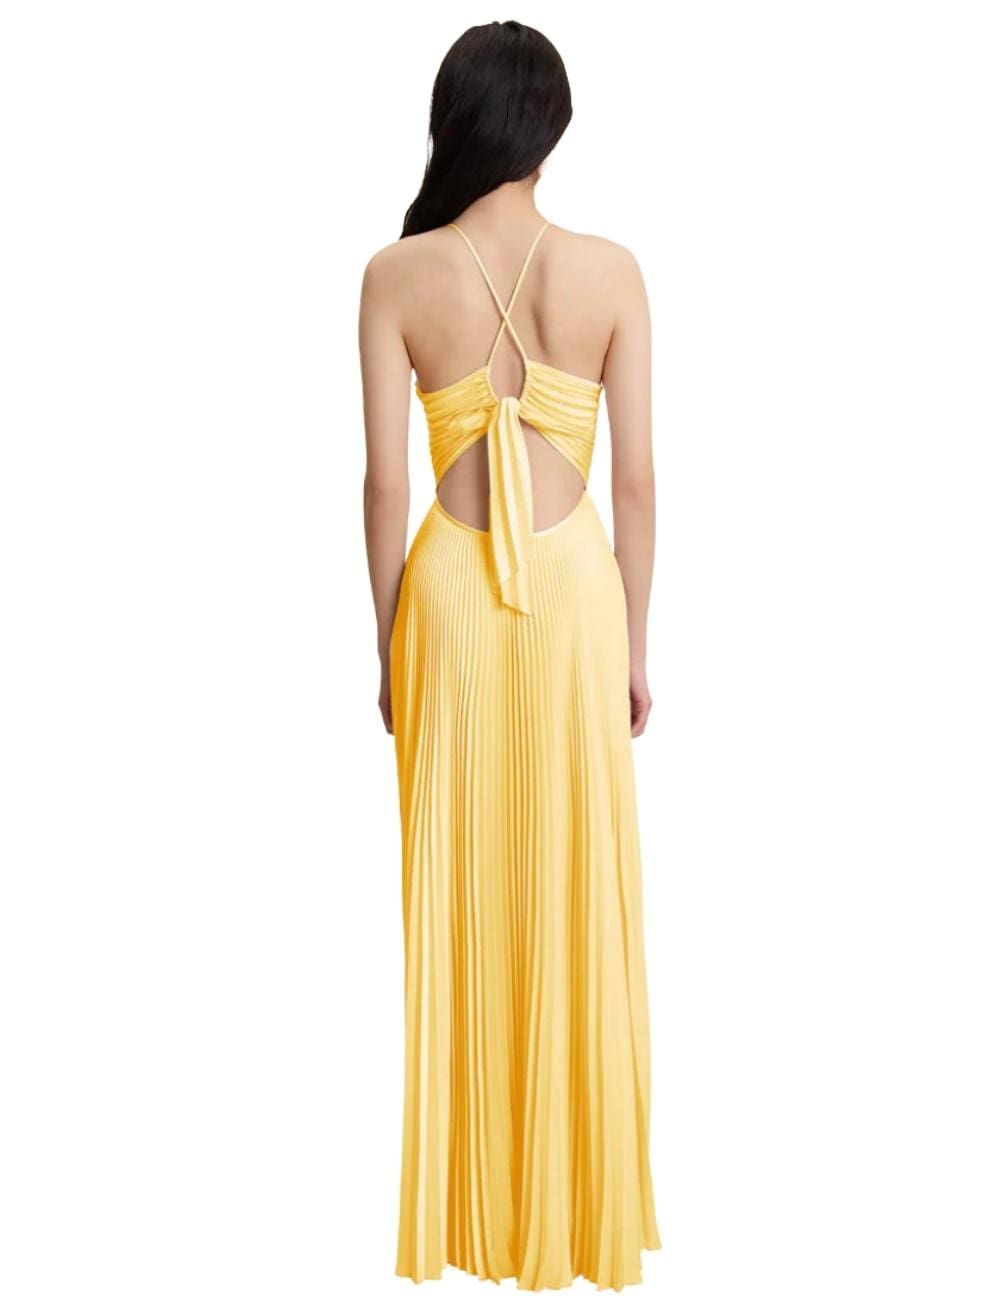 Aries Dress in Yellow